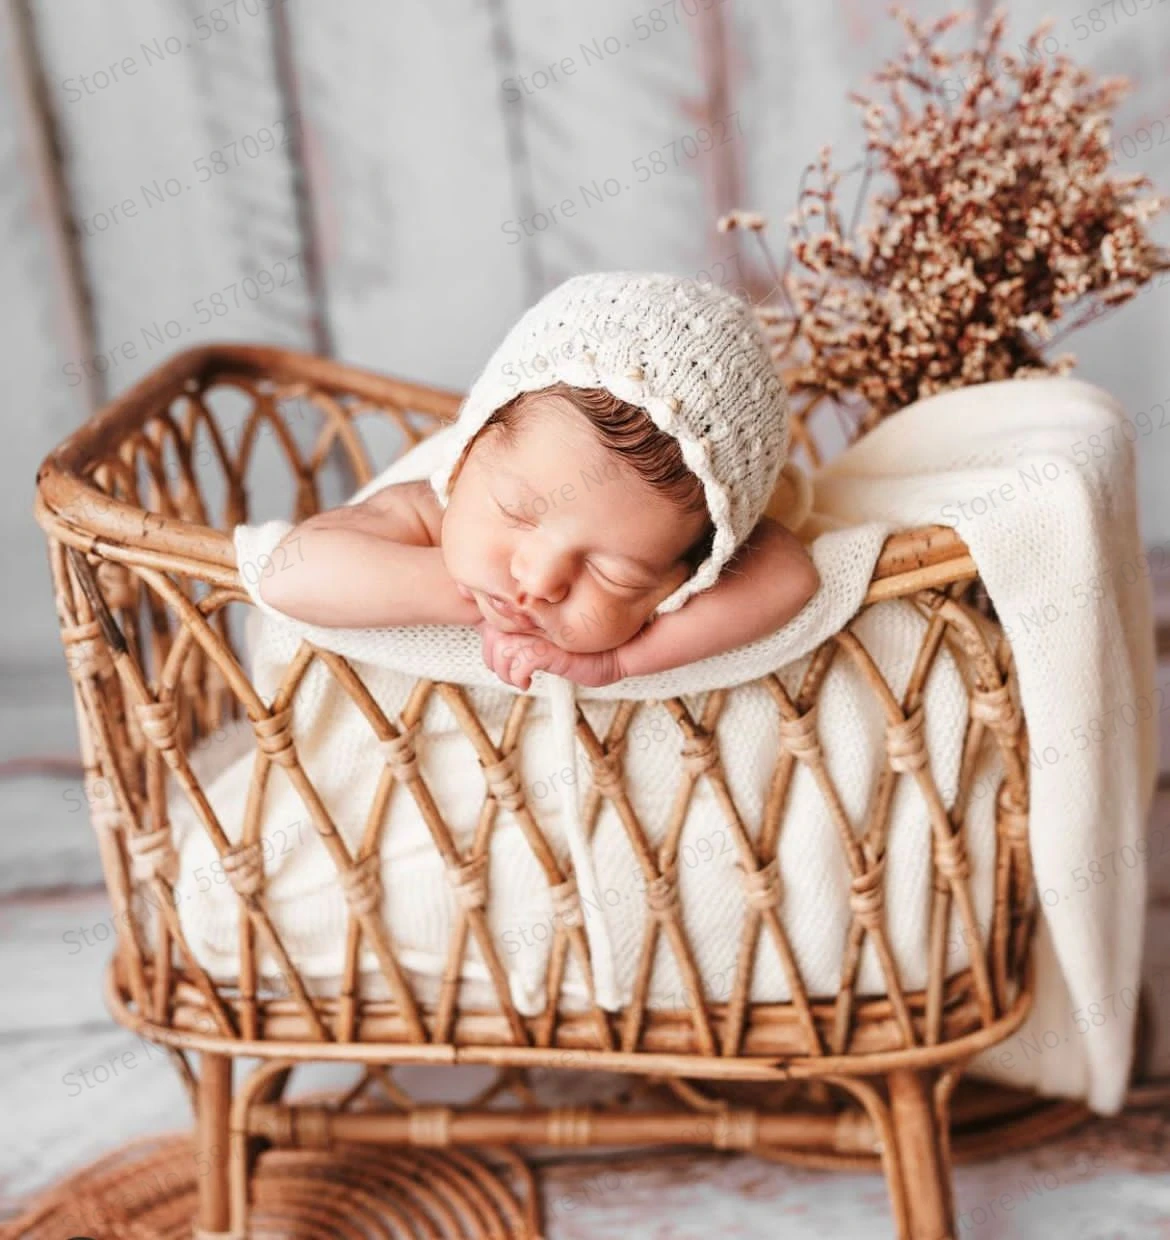 Newborn Photography Props Basket Vintage Rattan Baby Bed Weaving Baskets Wooden Crib for Newborn Photo Shoot Photo Furniture